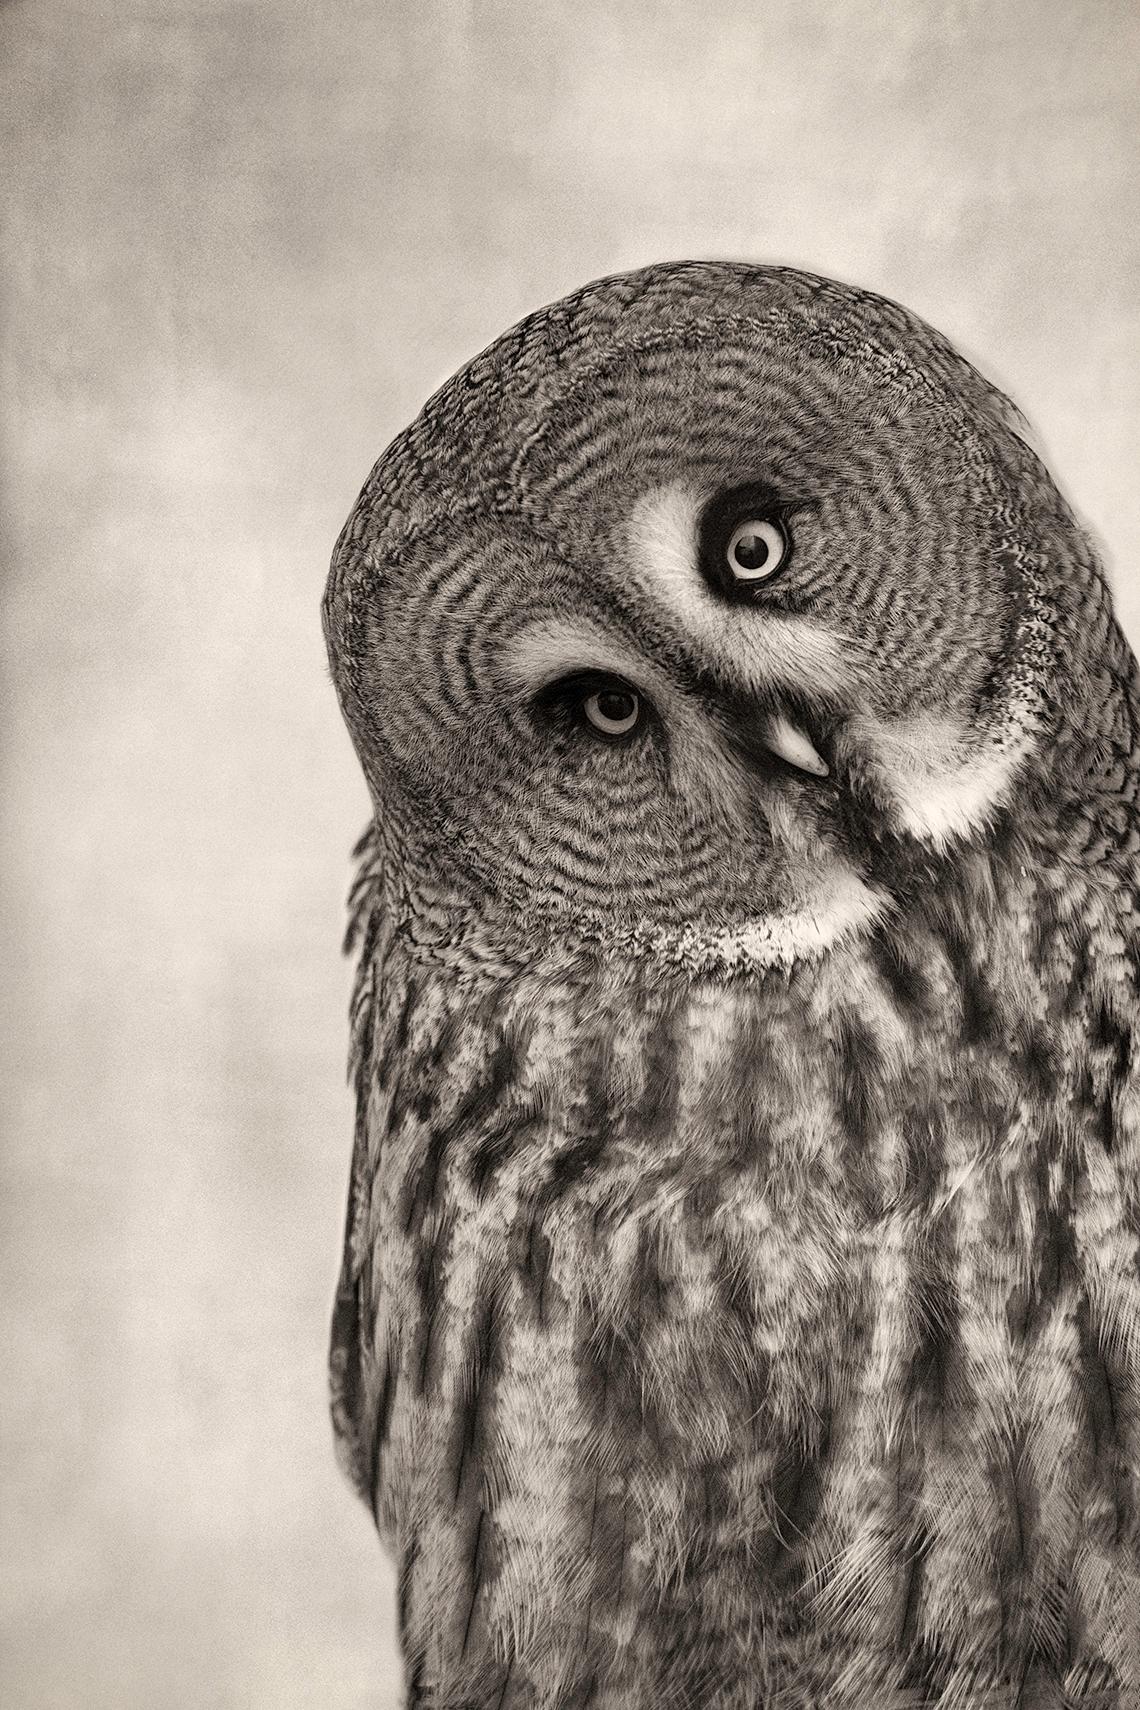 Beth Moon Animal Print - Great Grey Owl, limited edition photograph, signed, Platinum/Palladium Print